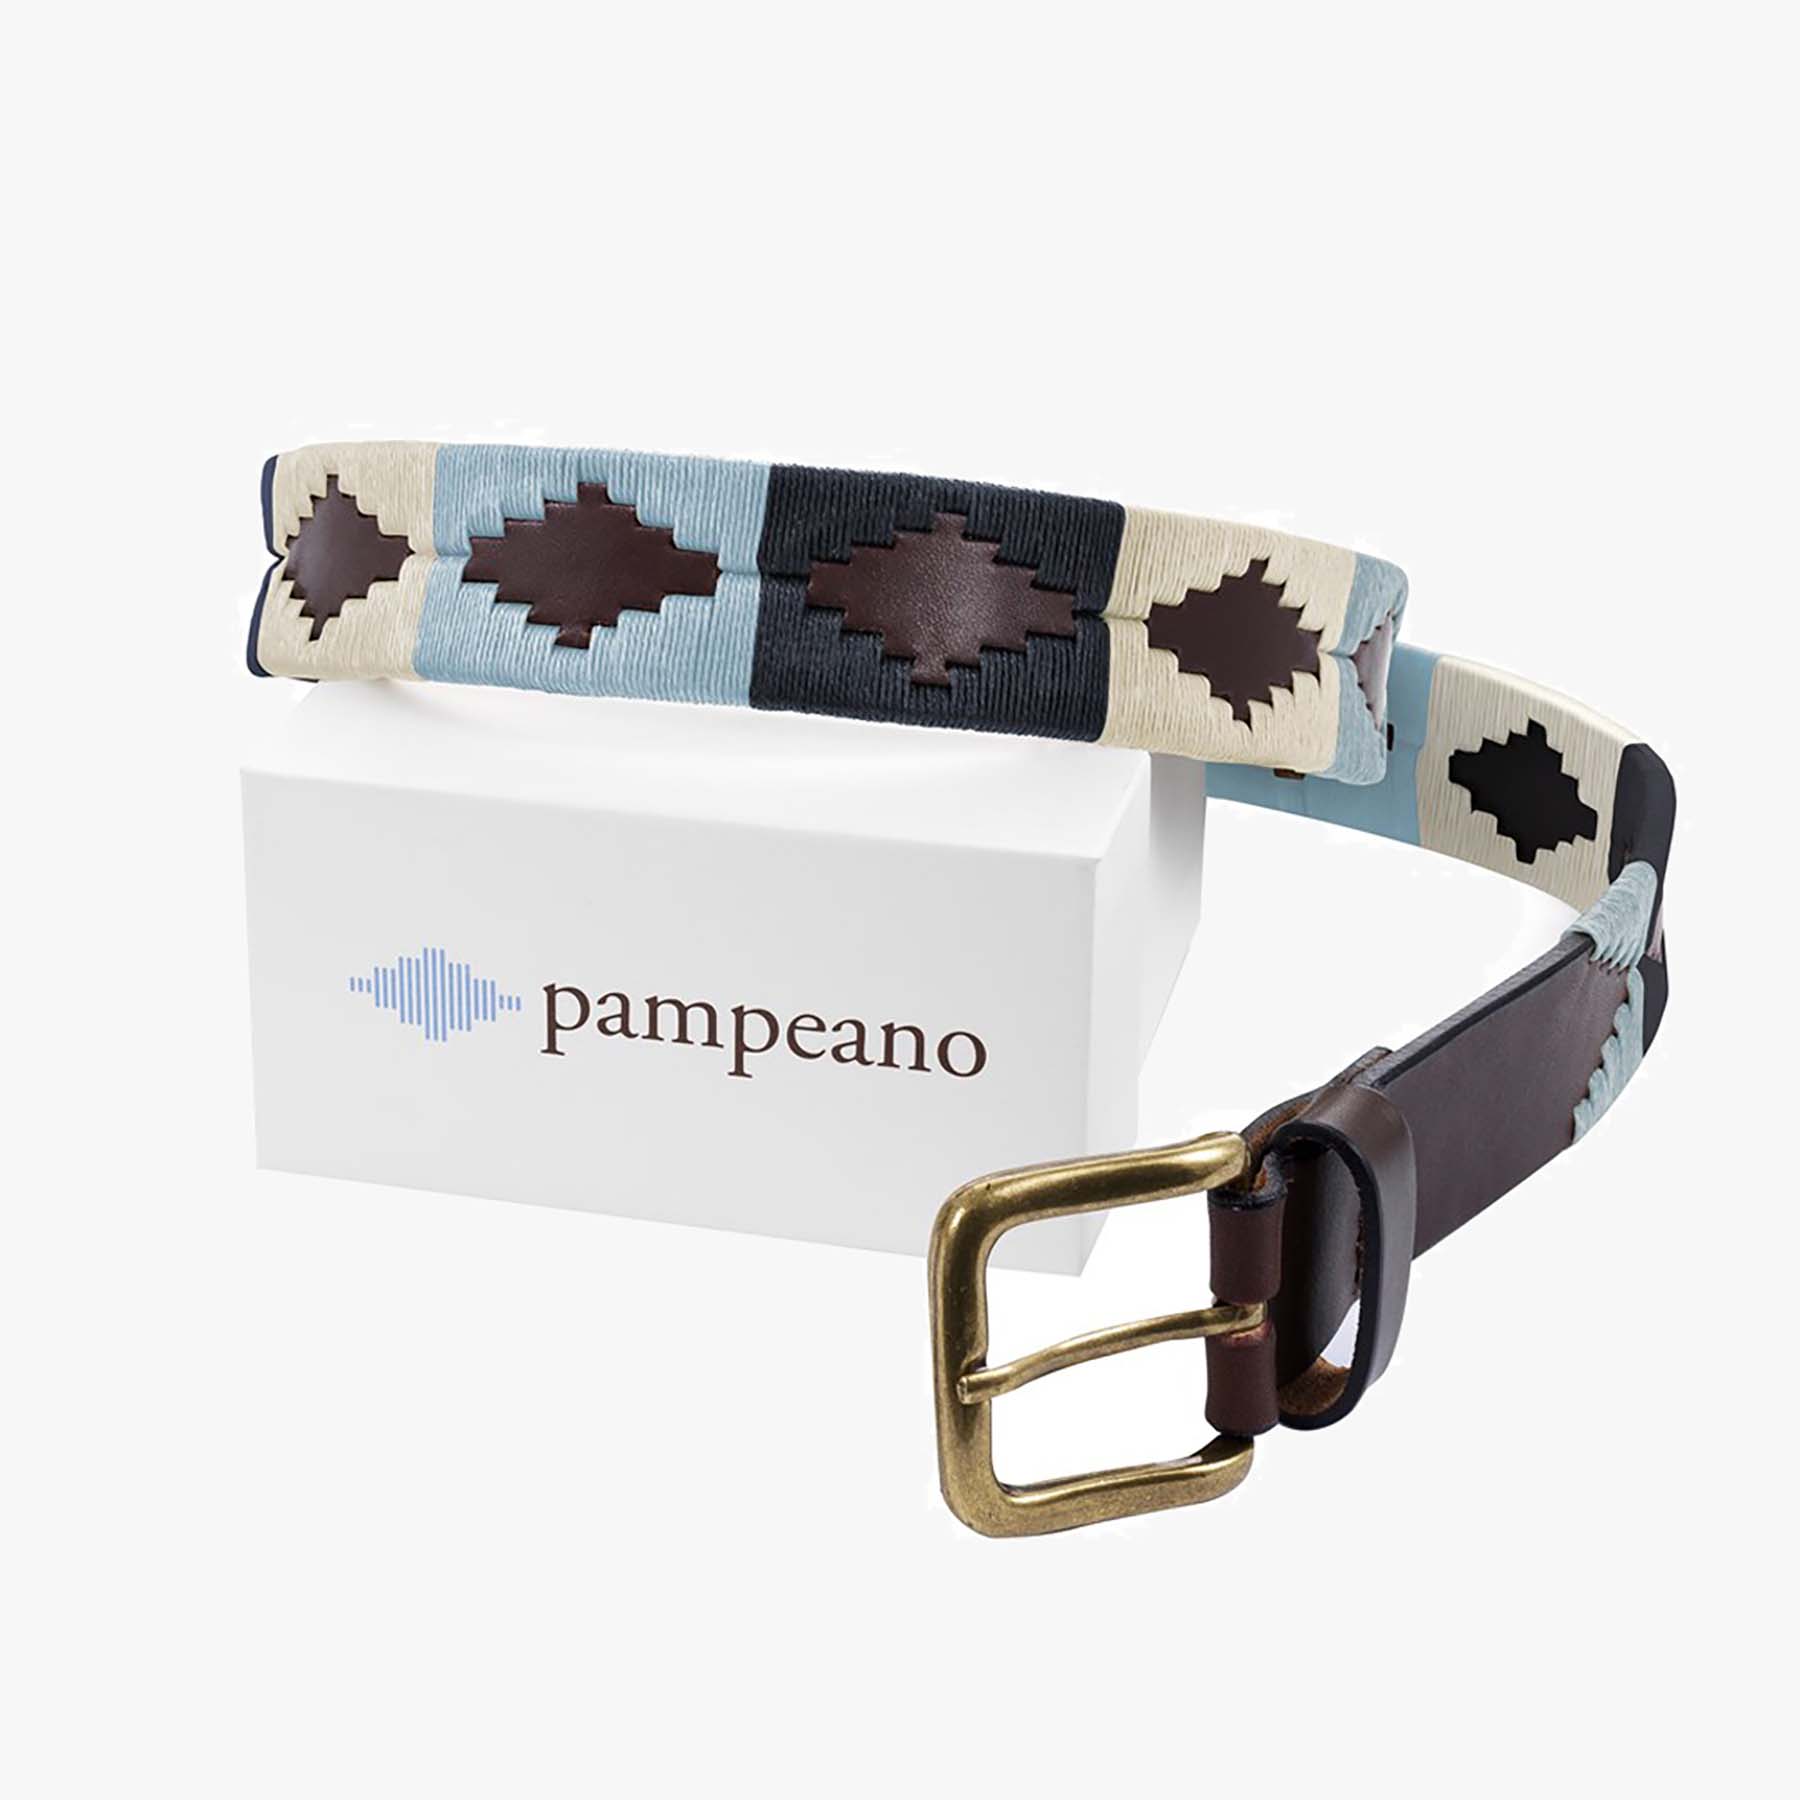 Pampeano Polo Belt, Sereno, with gift box